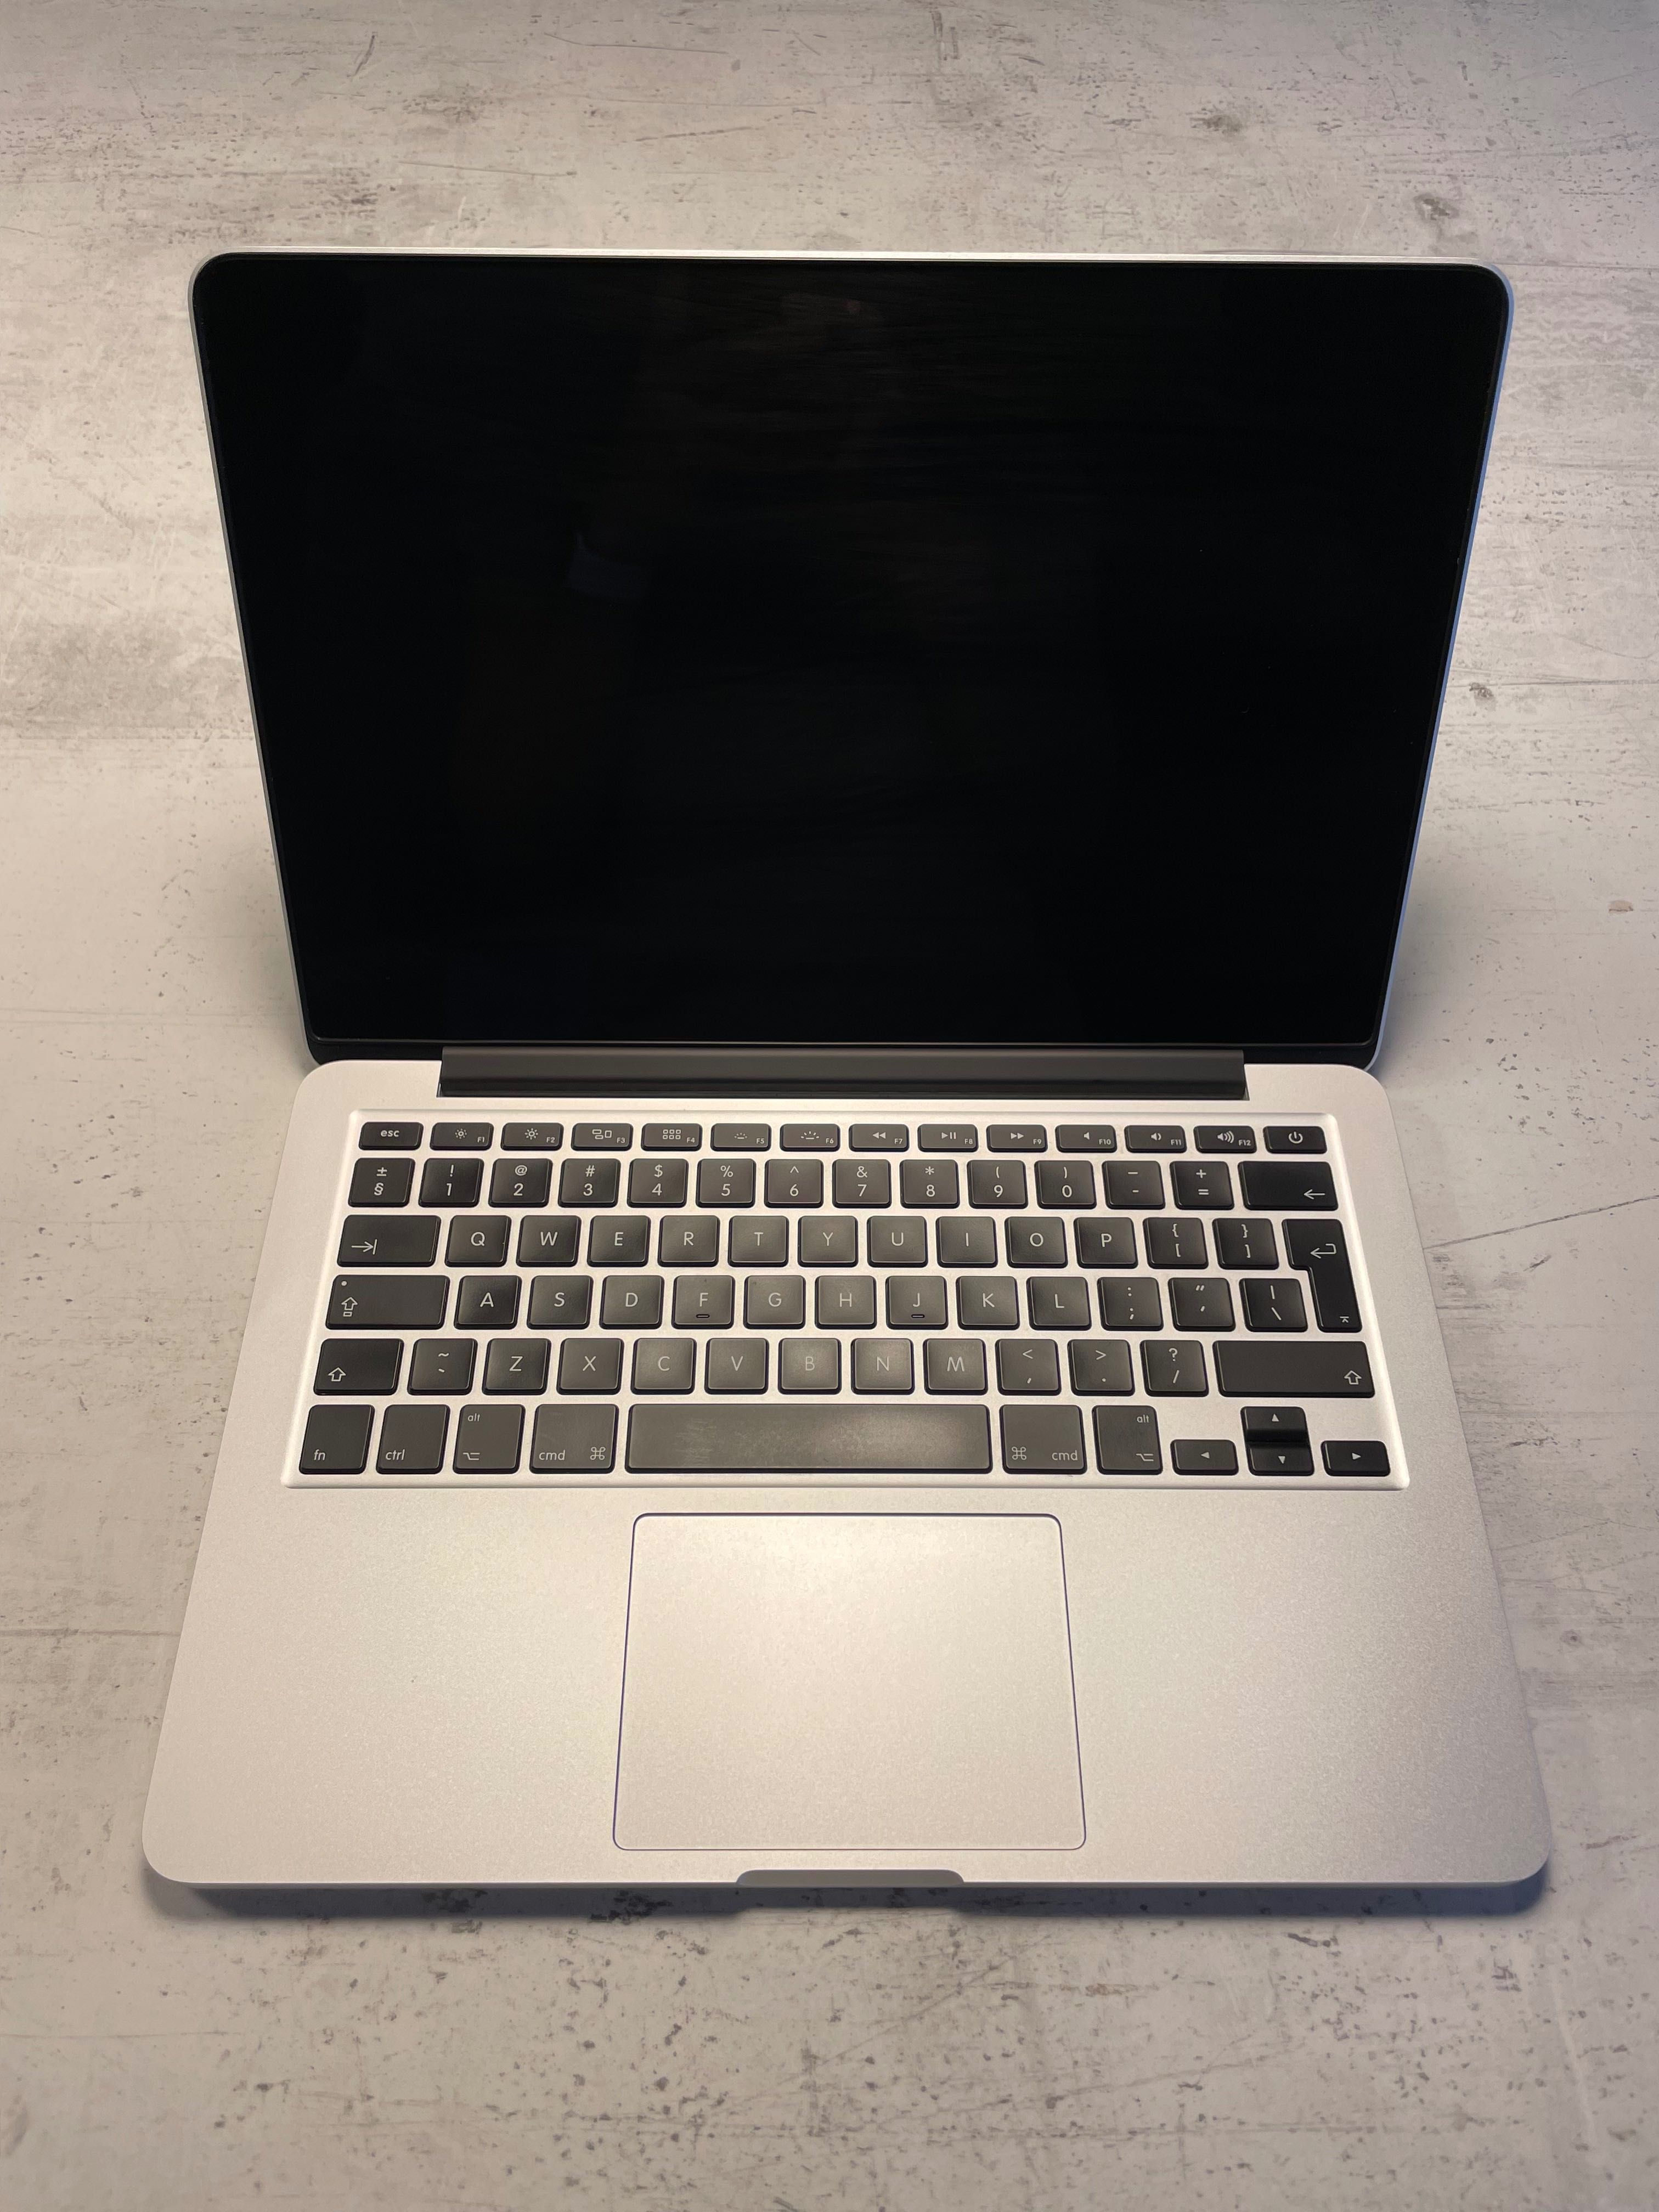 Apple Macbook Pro (Retina 13" / 2.7GHz i5 / 8GB / 128GB / Early 2015)